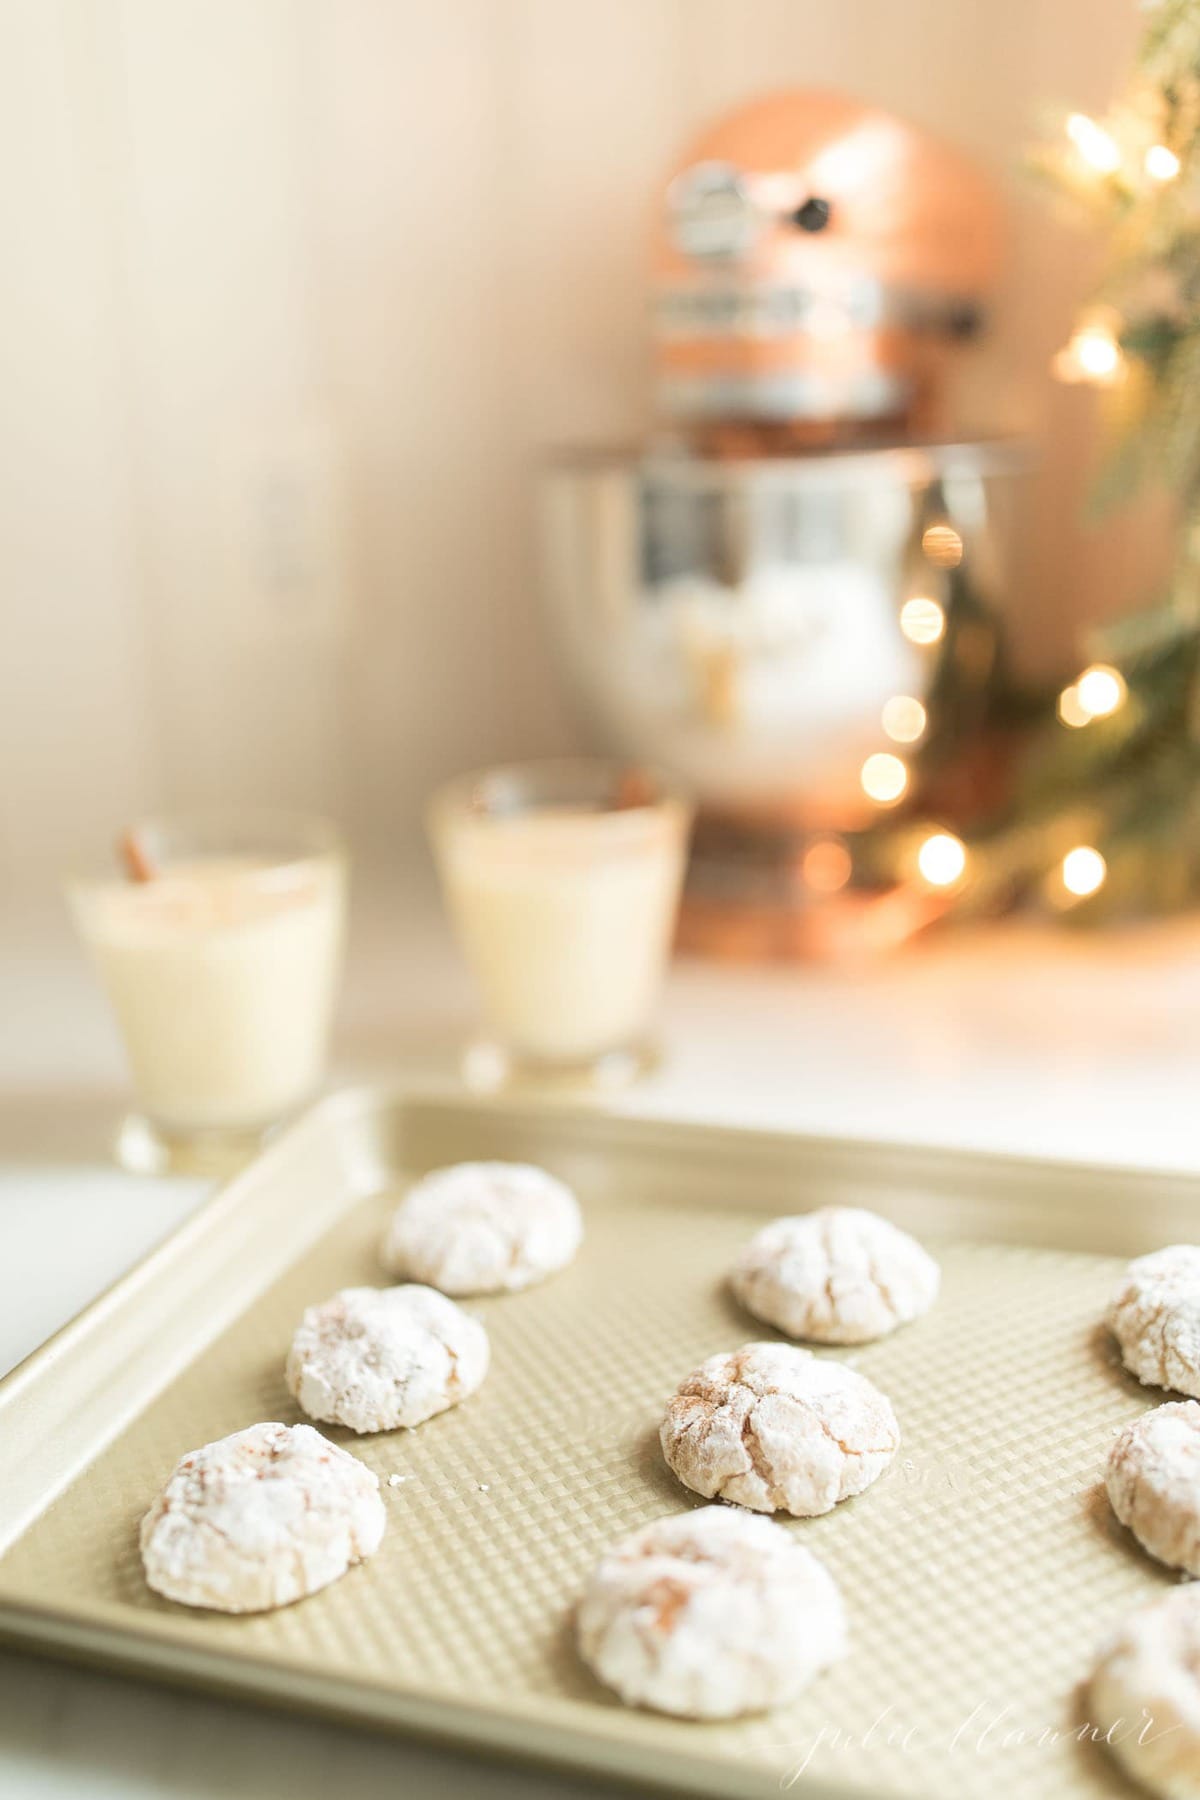 gooey butter eggnog cookies on a baking sheet in a kitchen